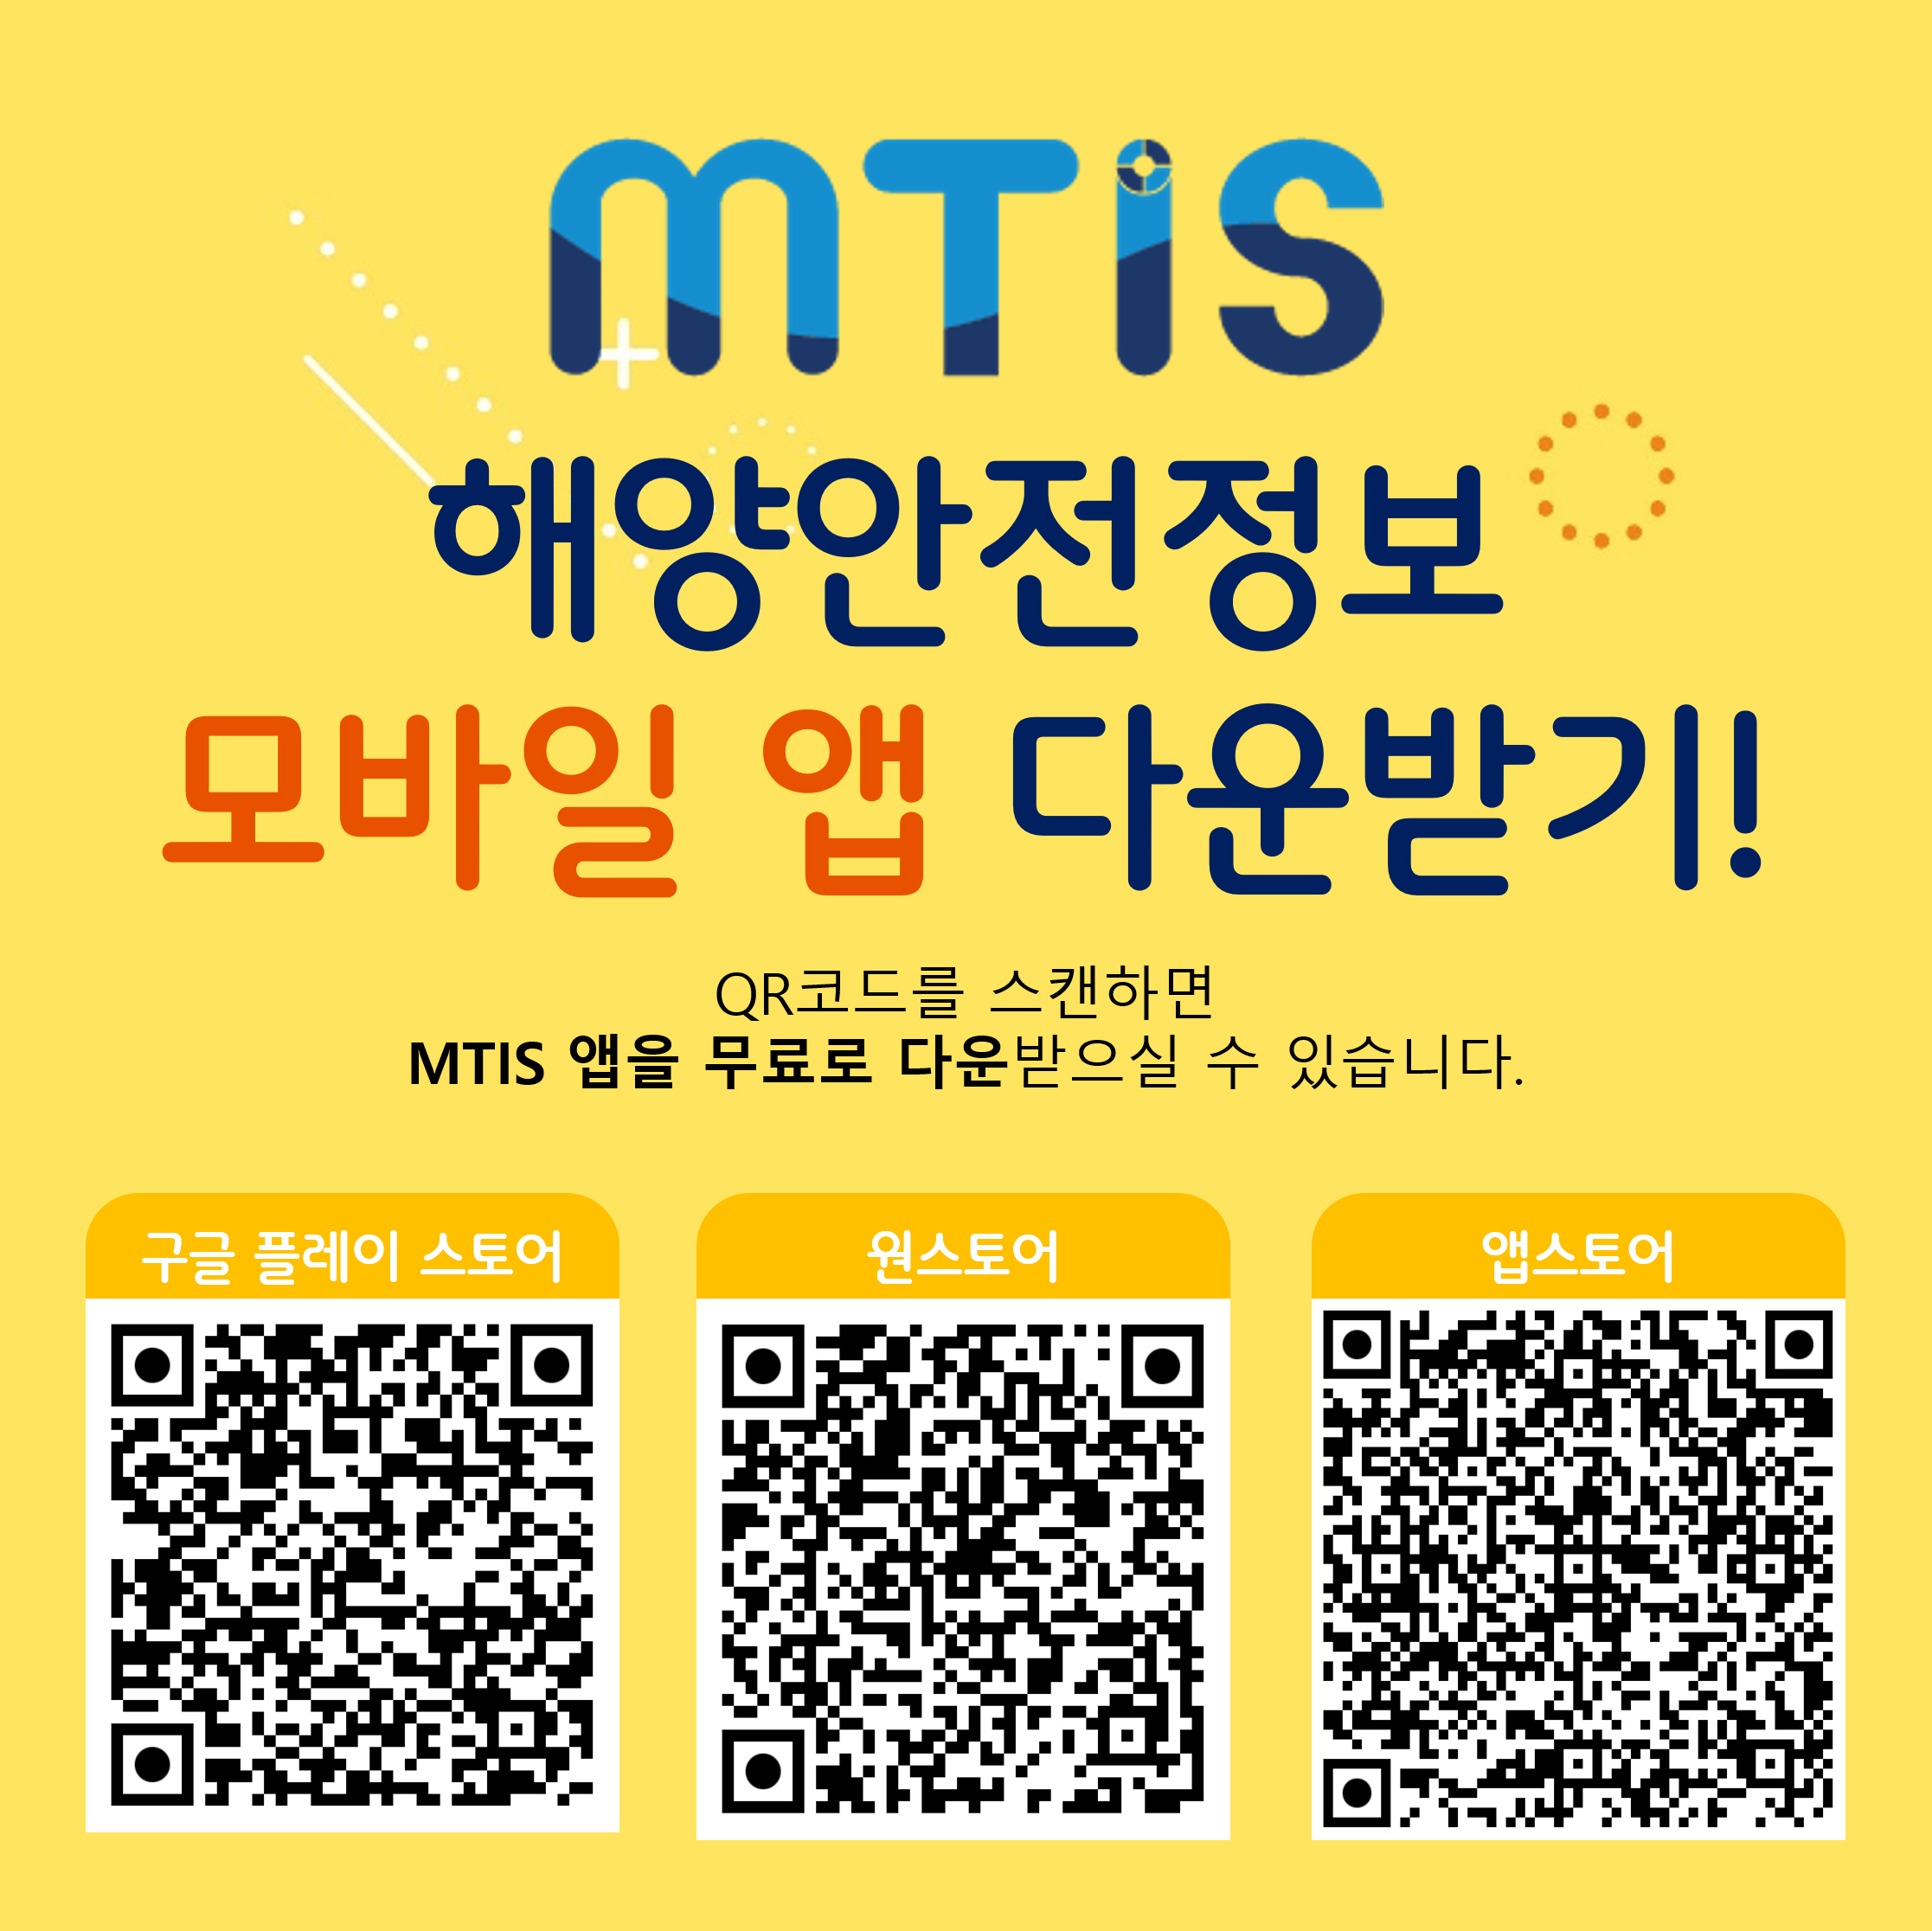 MTIS 해양안전정보 모바일 앱 다운받기!
QR코드를 스캔하면 MTIS 앱을 무료로 다운 받으실수 있습니다.
구글 플레이 스토어 : https://play.google.com/store/apps/details;jsessionid=B60E2AAAAB674DBA0215C0AFA52A5278?id=kr.or.komsa.mtis
원스토어 : https://m.onestore.co.kr/mobilepoc/apps/appsDetail.omp?prodId=0000771271
앱스토어 : https://apps.apple.com/kr/app/%ED%95%B4%EC%96%91%EA%B5%90%ED%86%B5%EC%95%88%EC%A0%84%EC%A0%95%EB%B3%B4/id6462842483